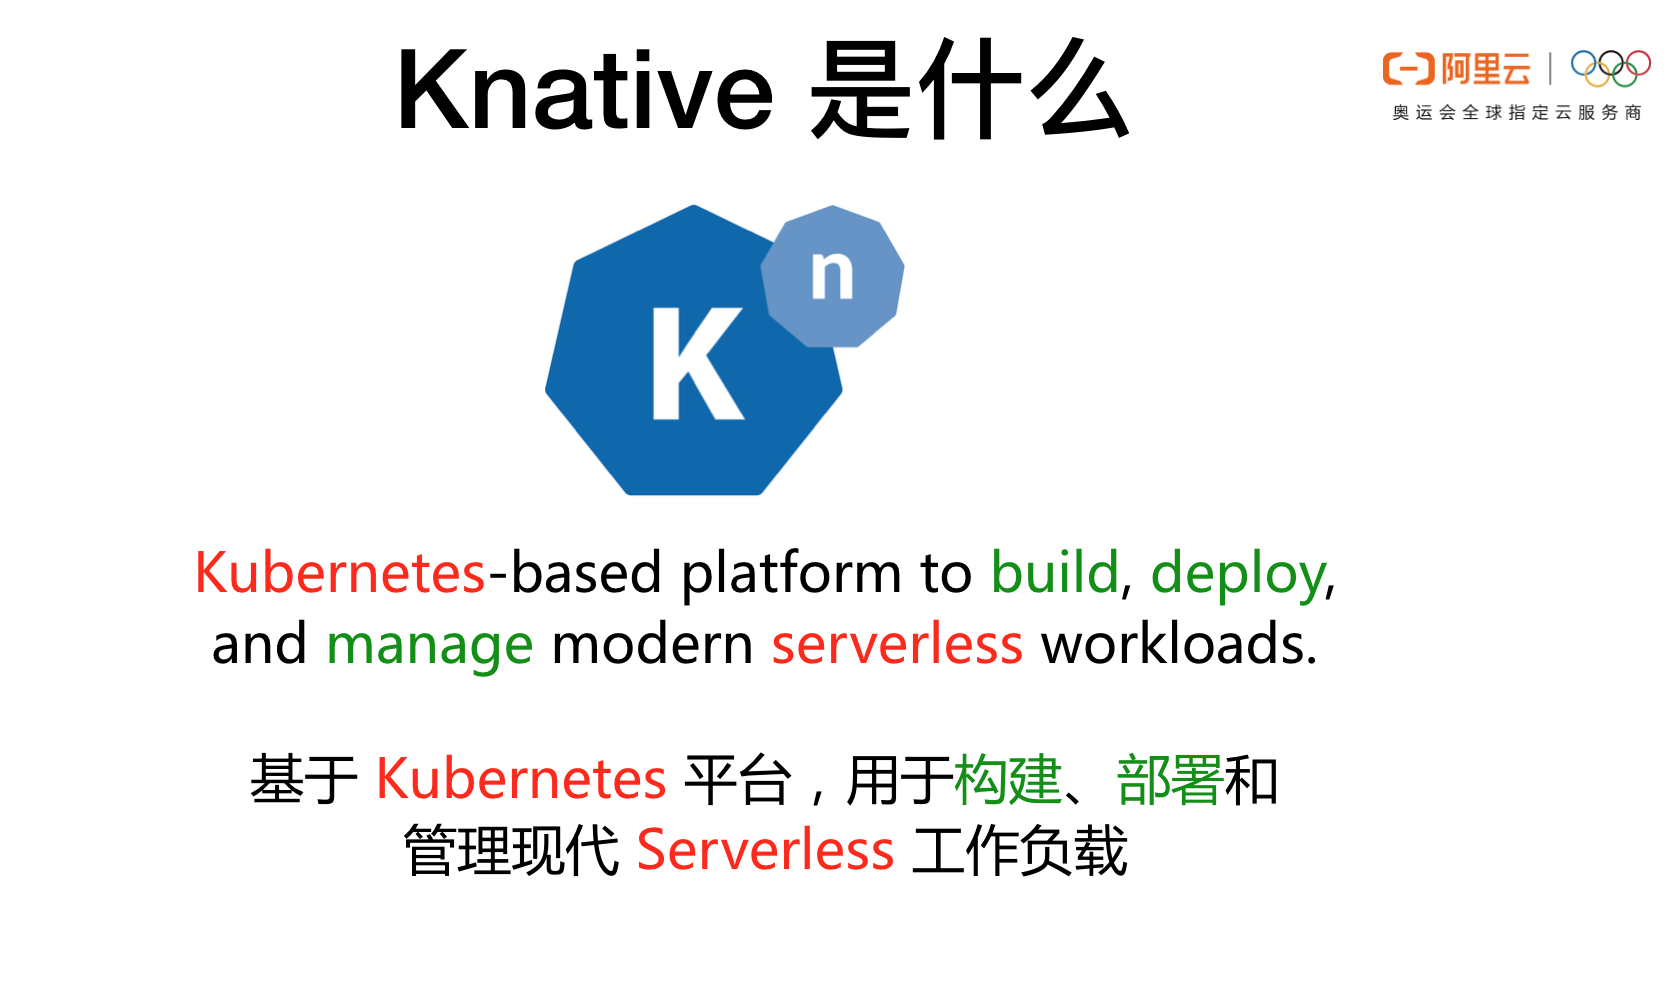 Knative Serverless 之道：如何 0 运维、低成本实现应用托管？ 